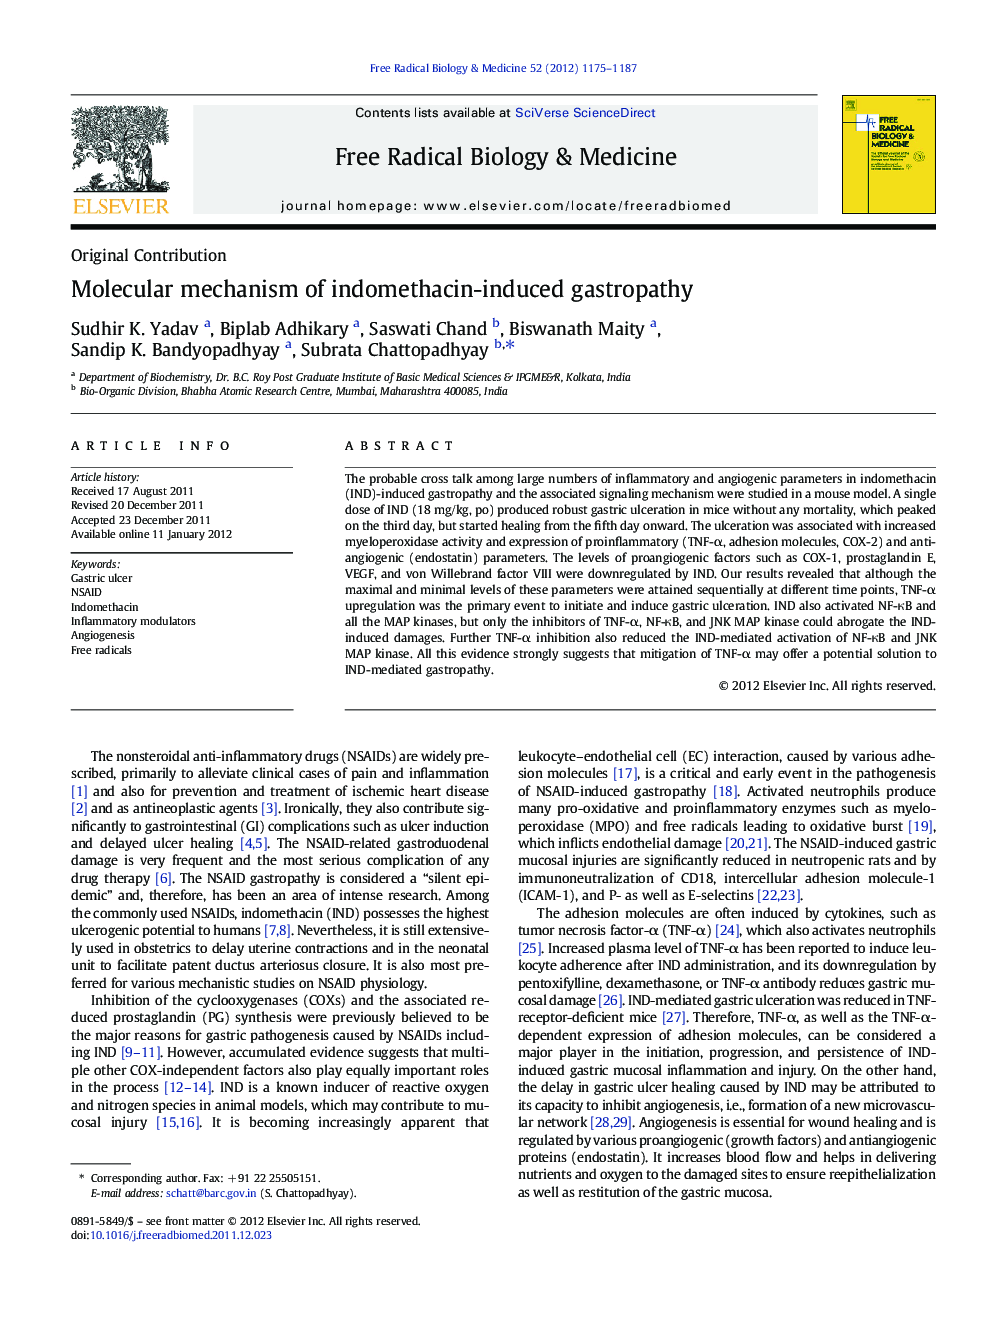 Molecular mechanism of indomethacin-induced gastropathy